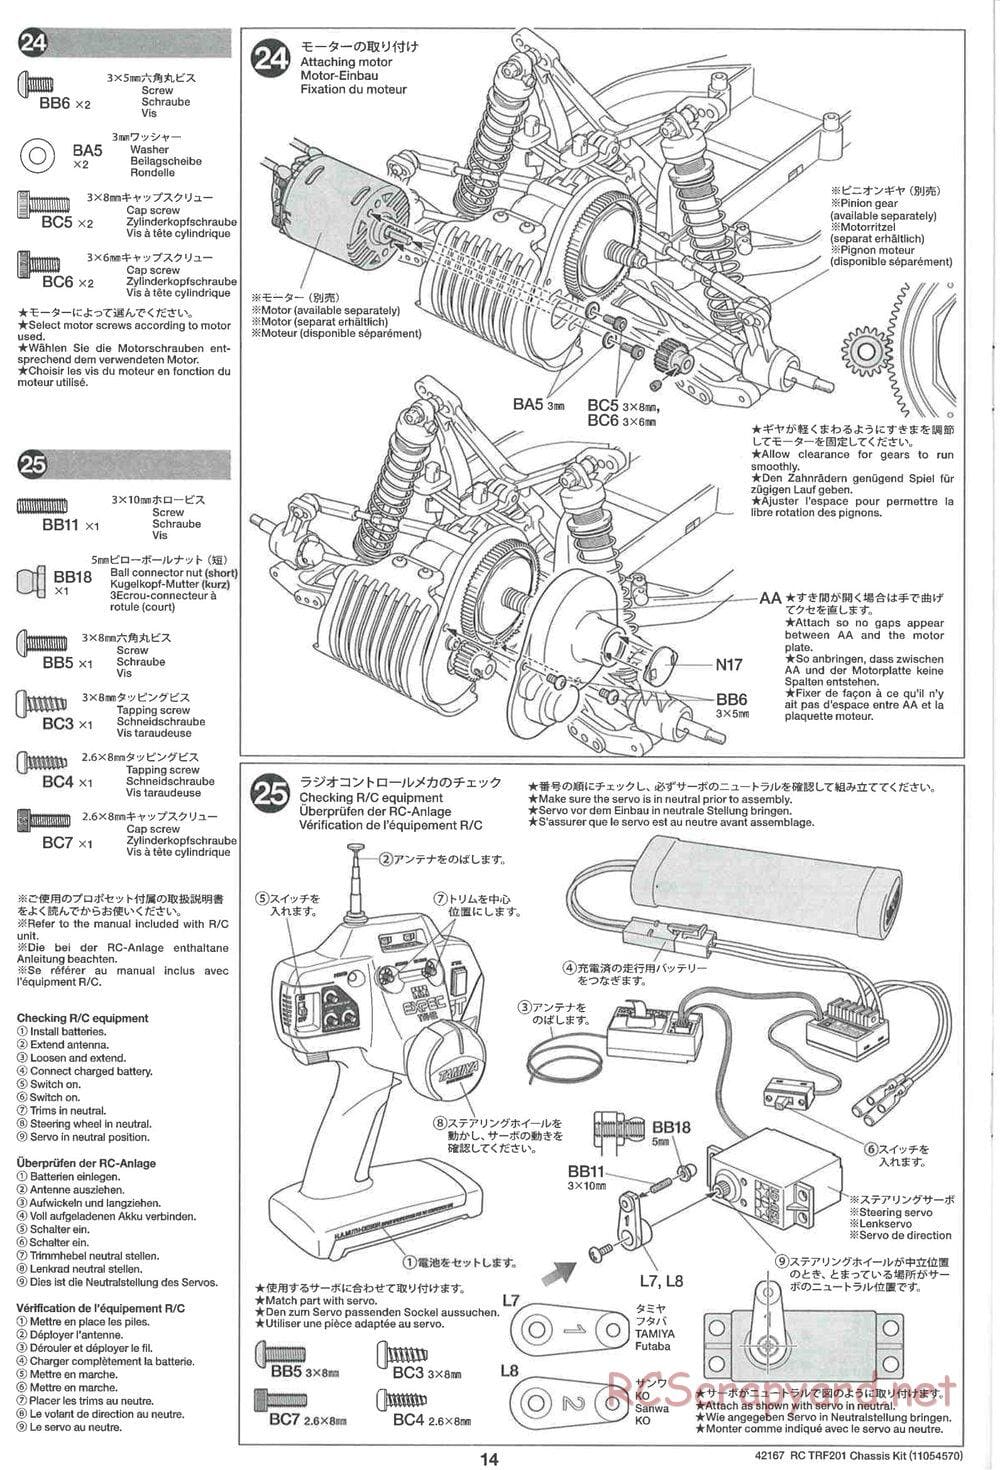 Tamiya - TRF201 Chassis - Manual - Page 14